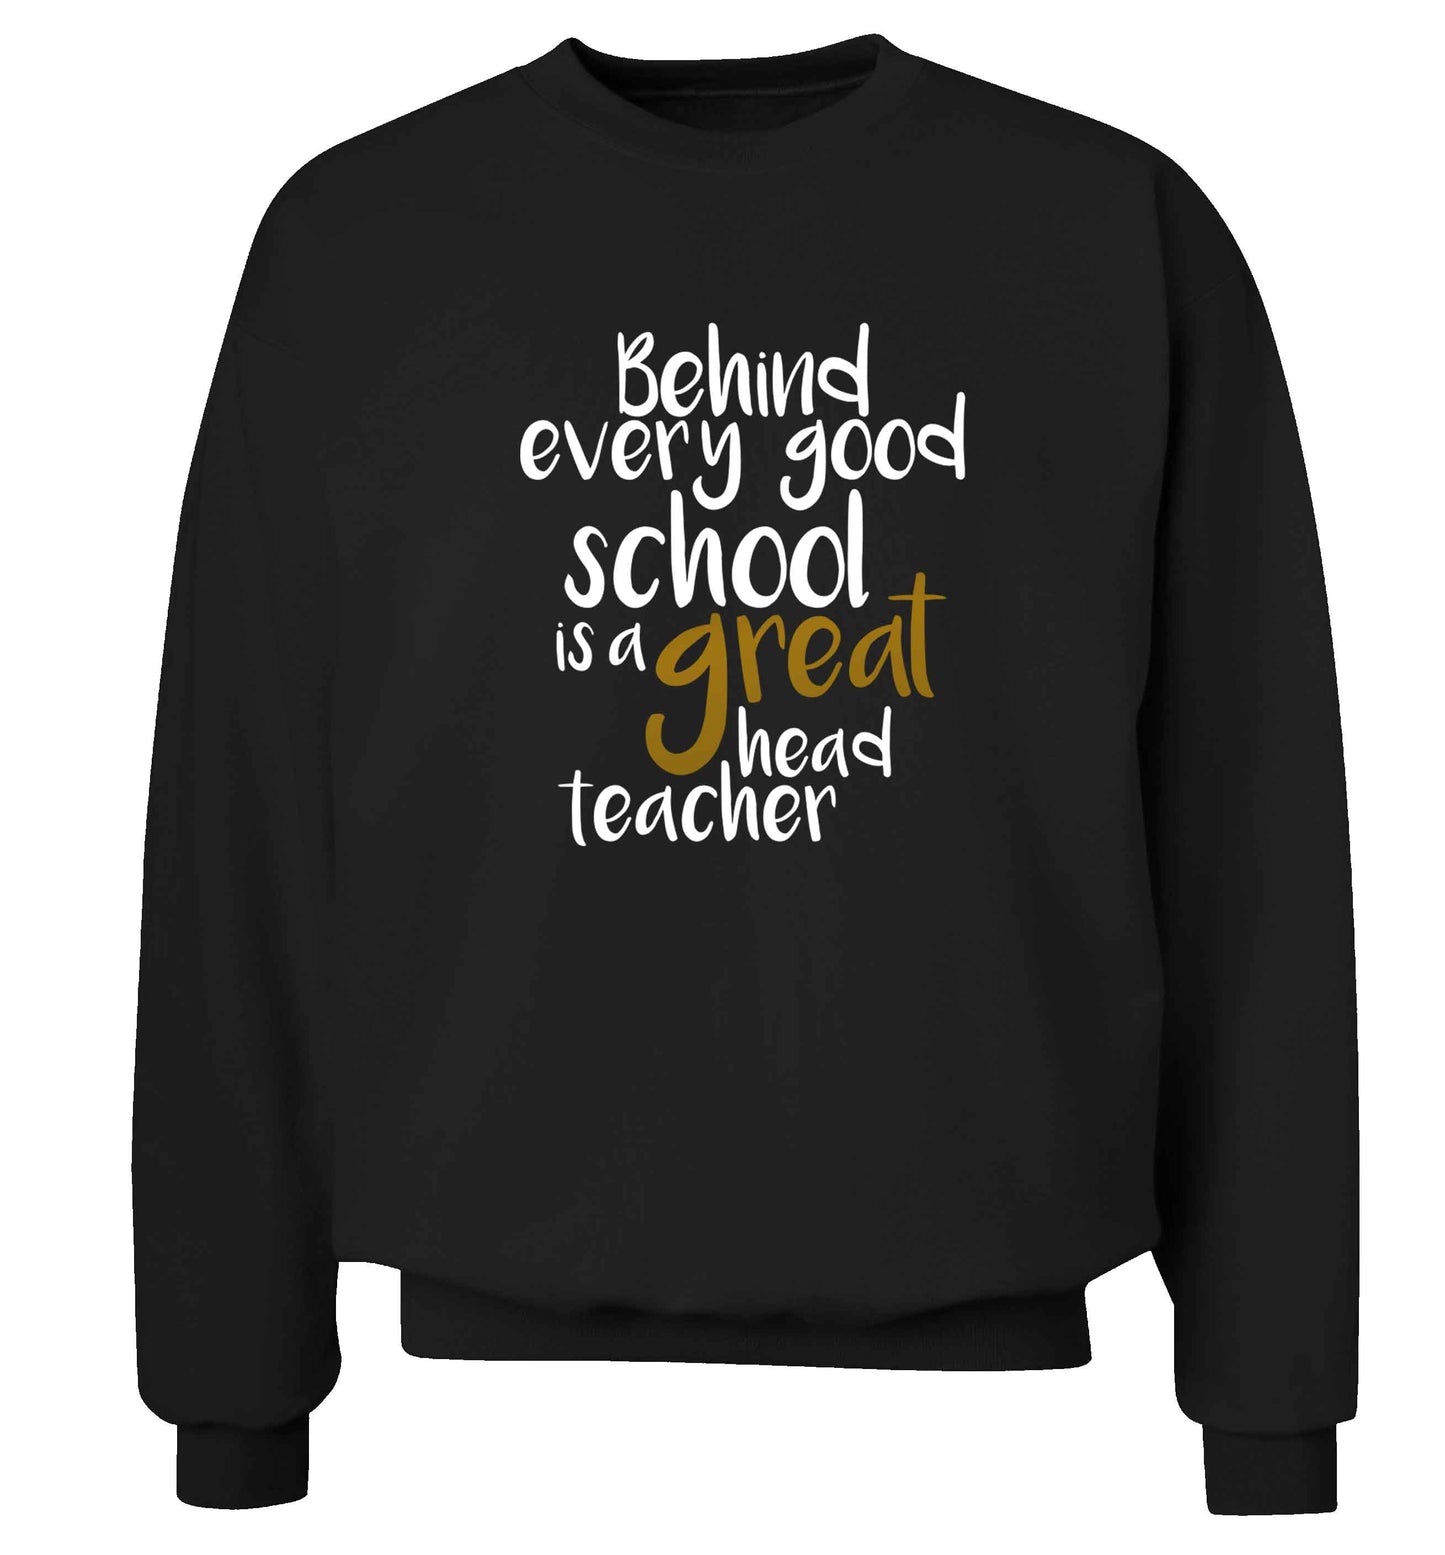 Behind every good school is a great head teacher adult's unisex black sweater 2XL